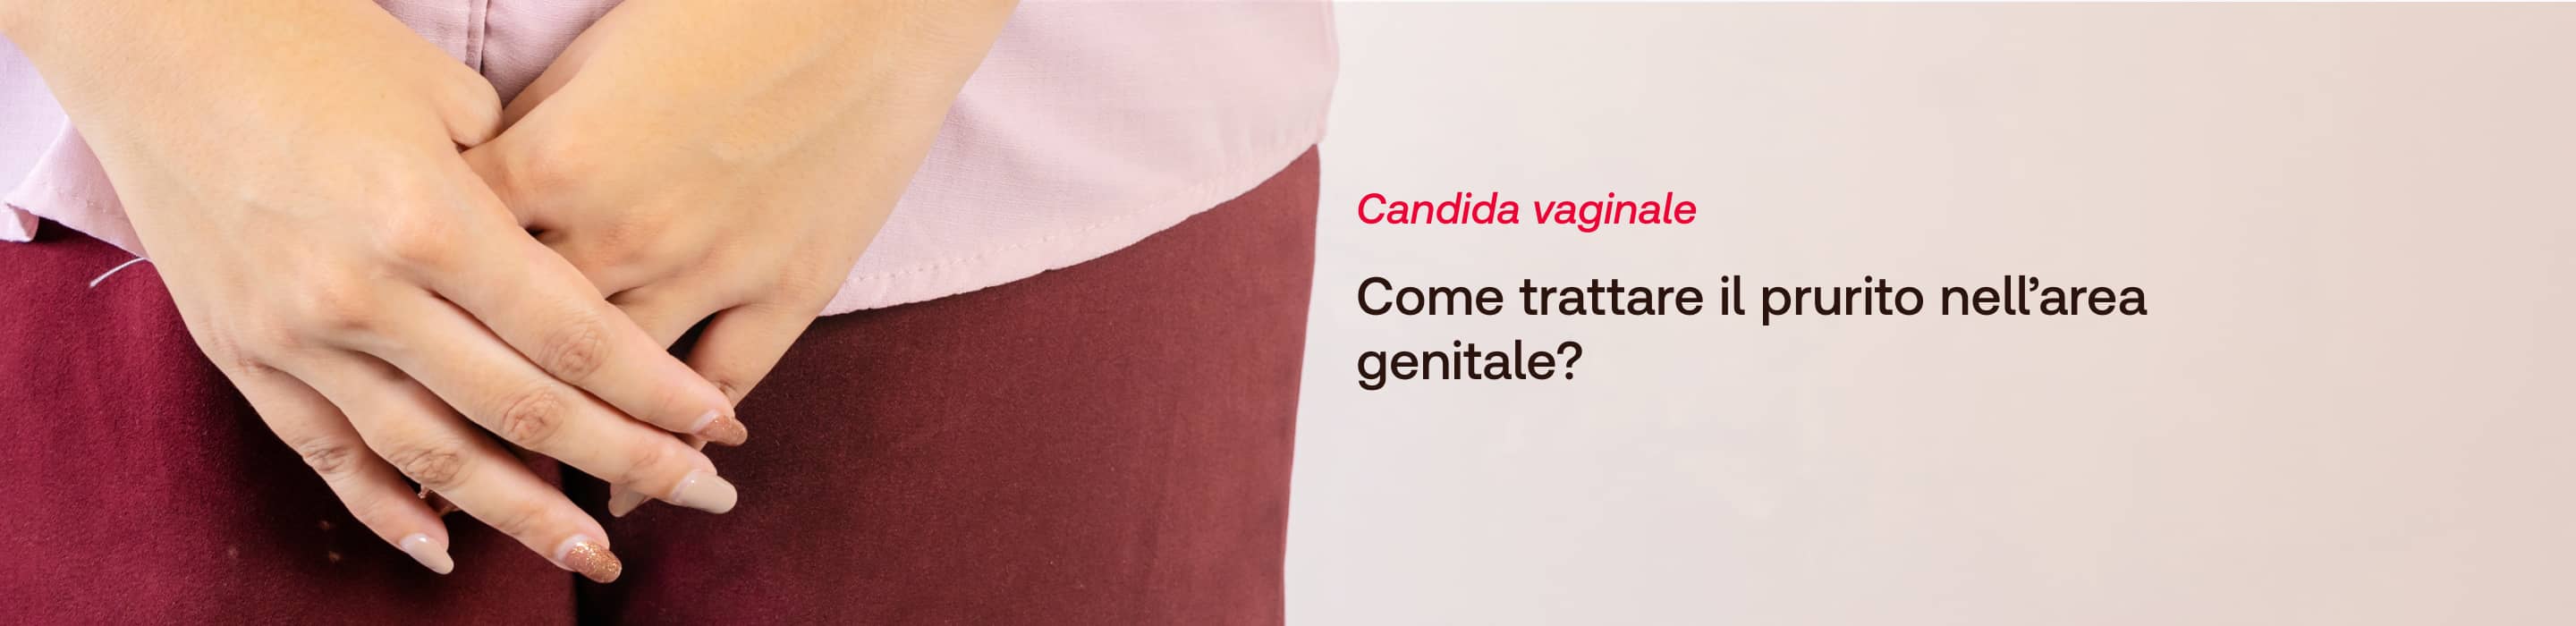  Candida vaginale - GUIDA